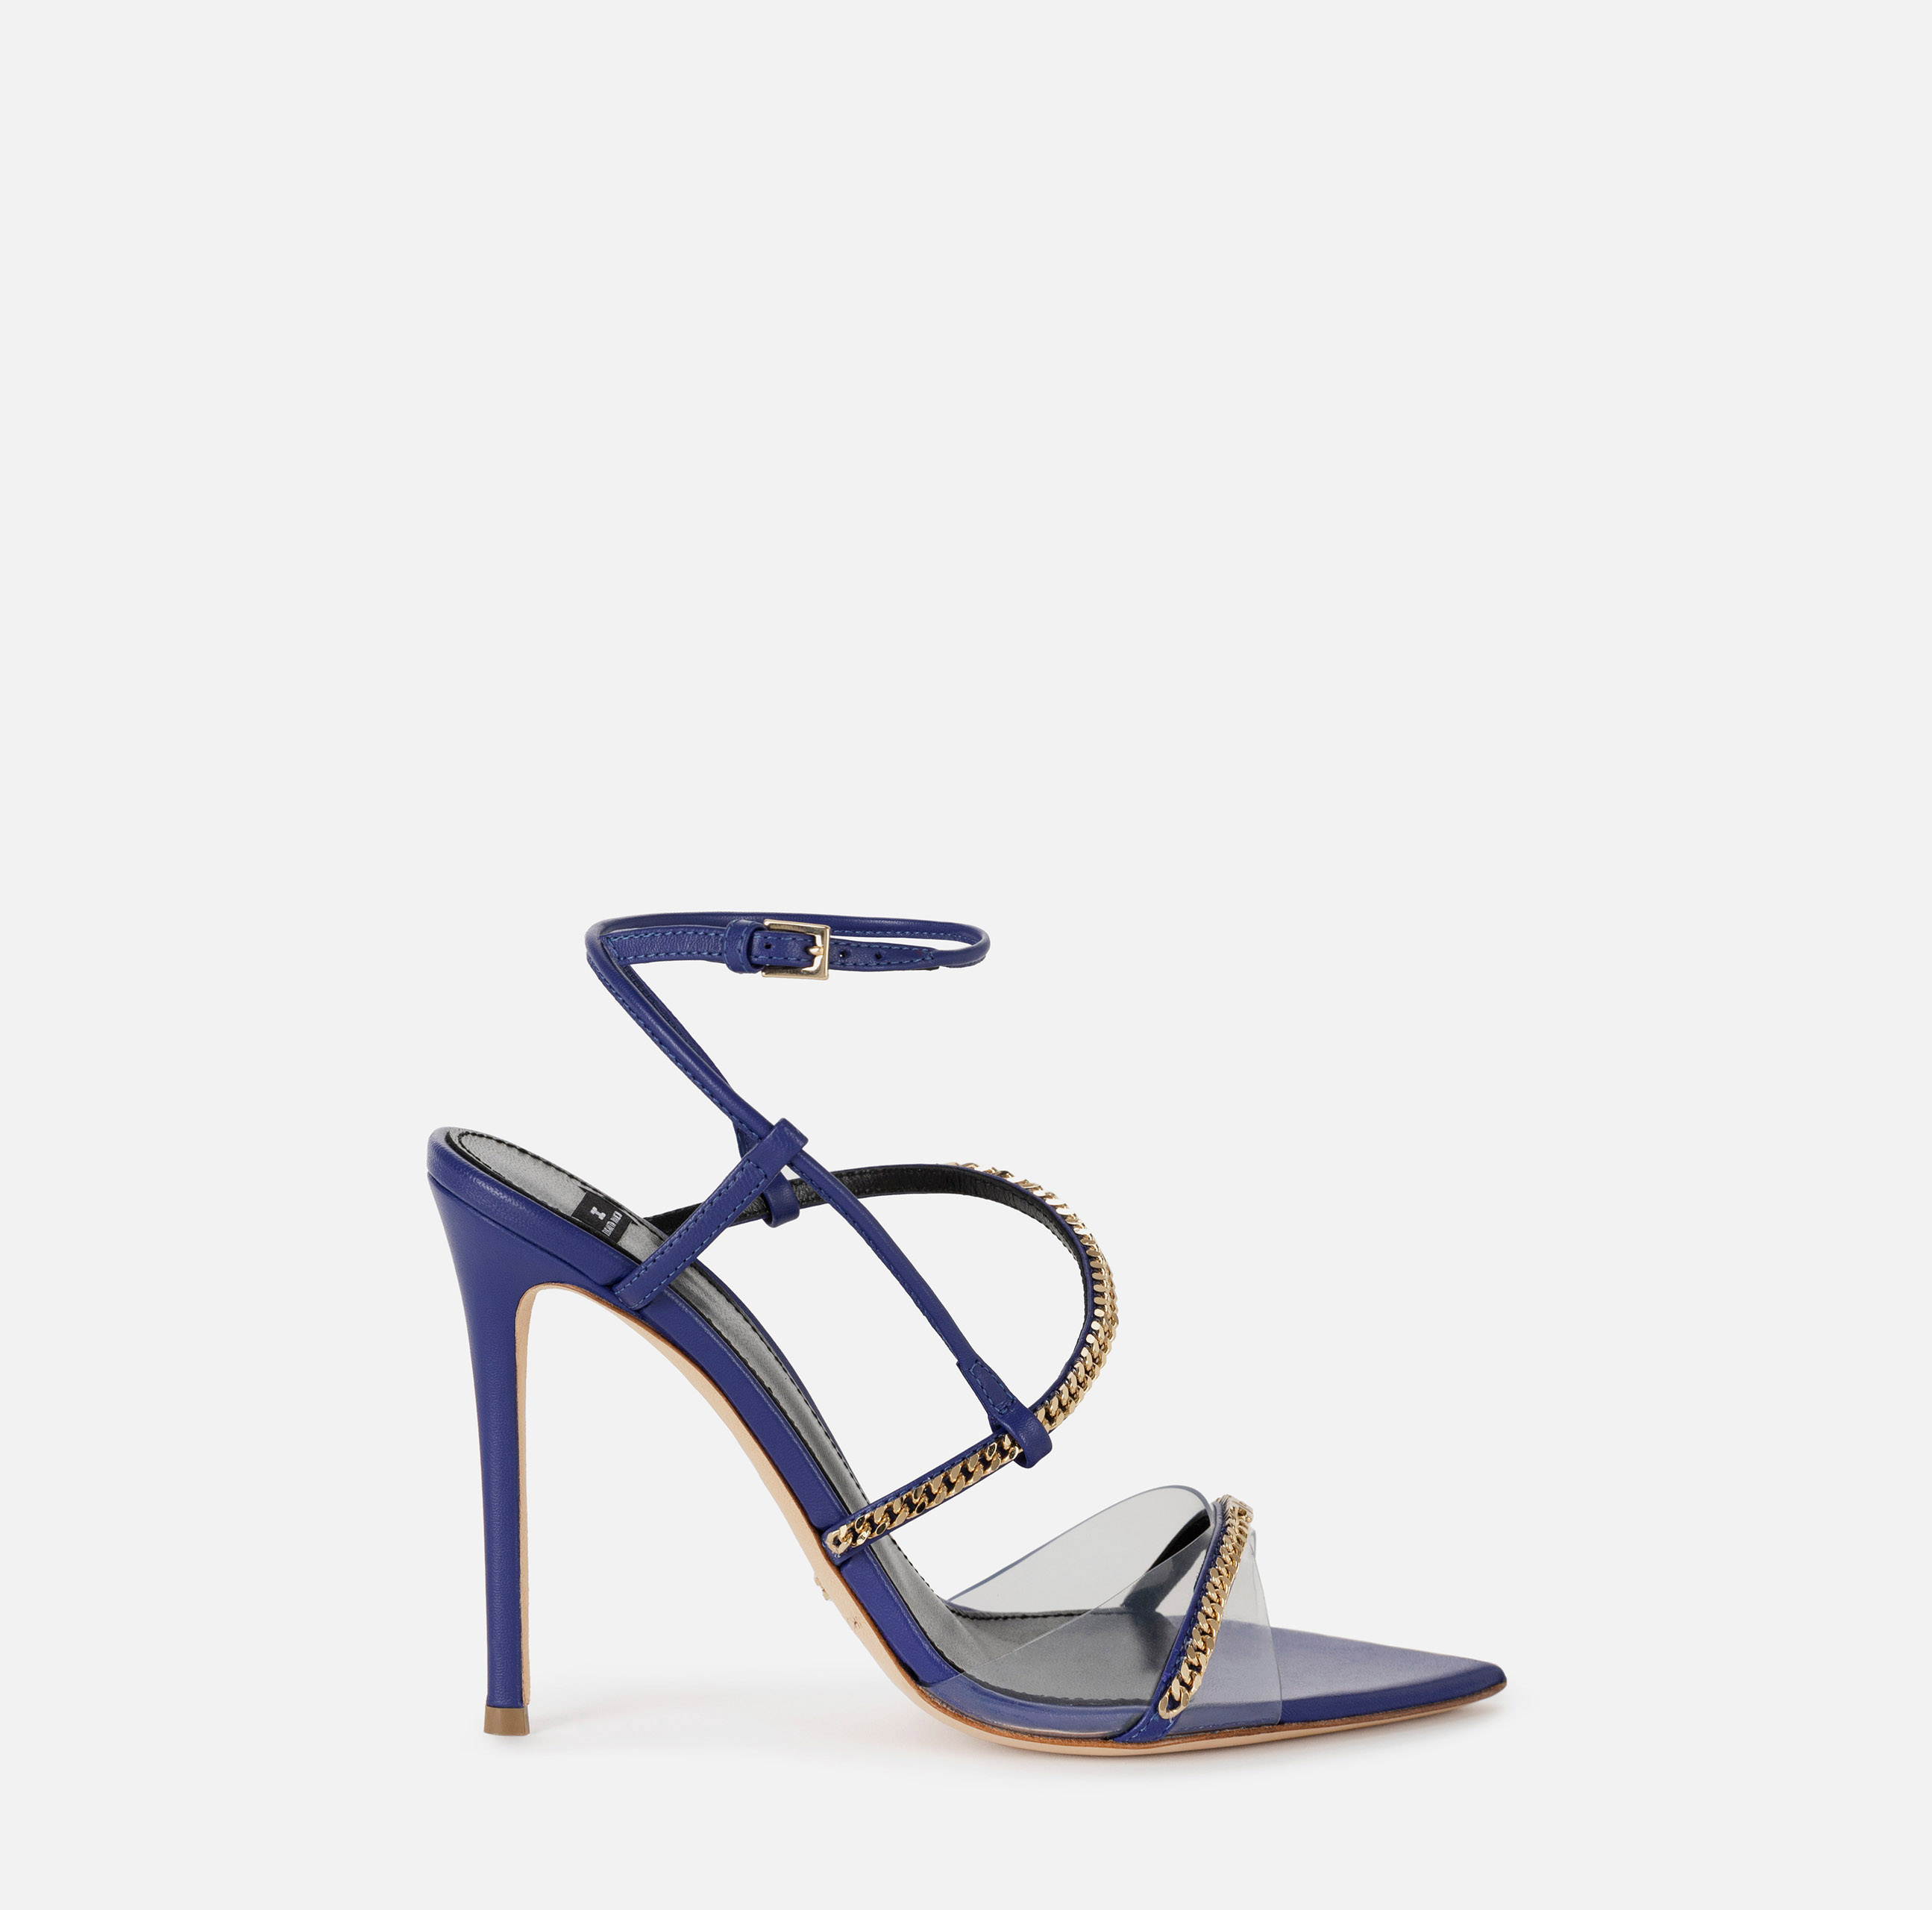 Leather sandals with groumette - SCARPE - Elisabetta Franchi